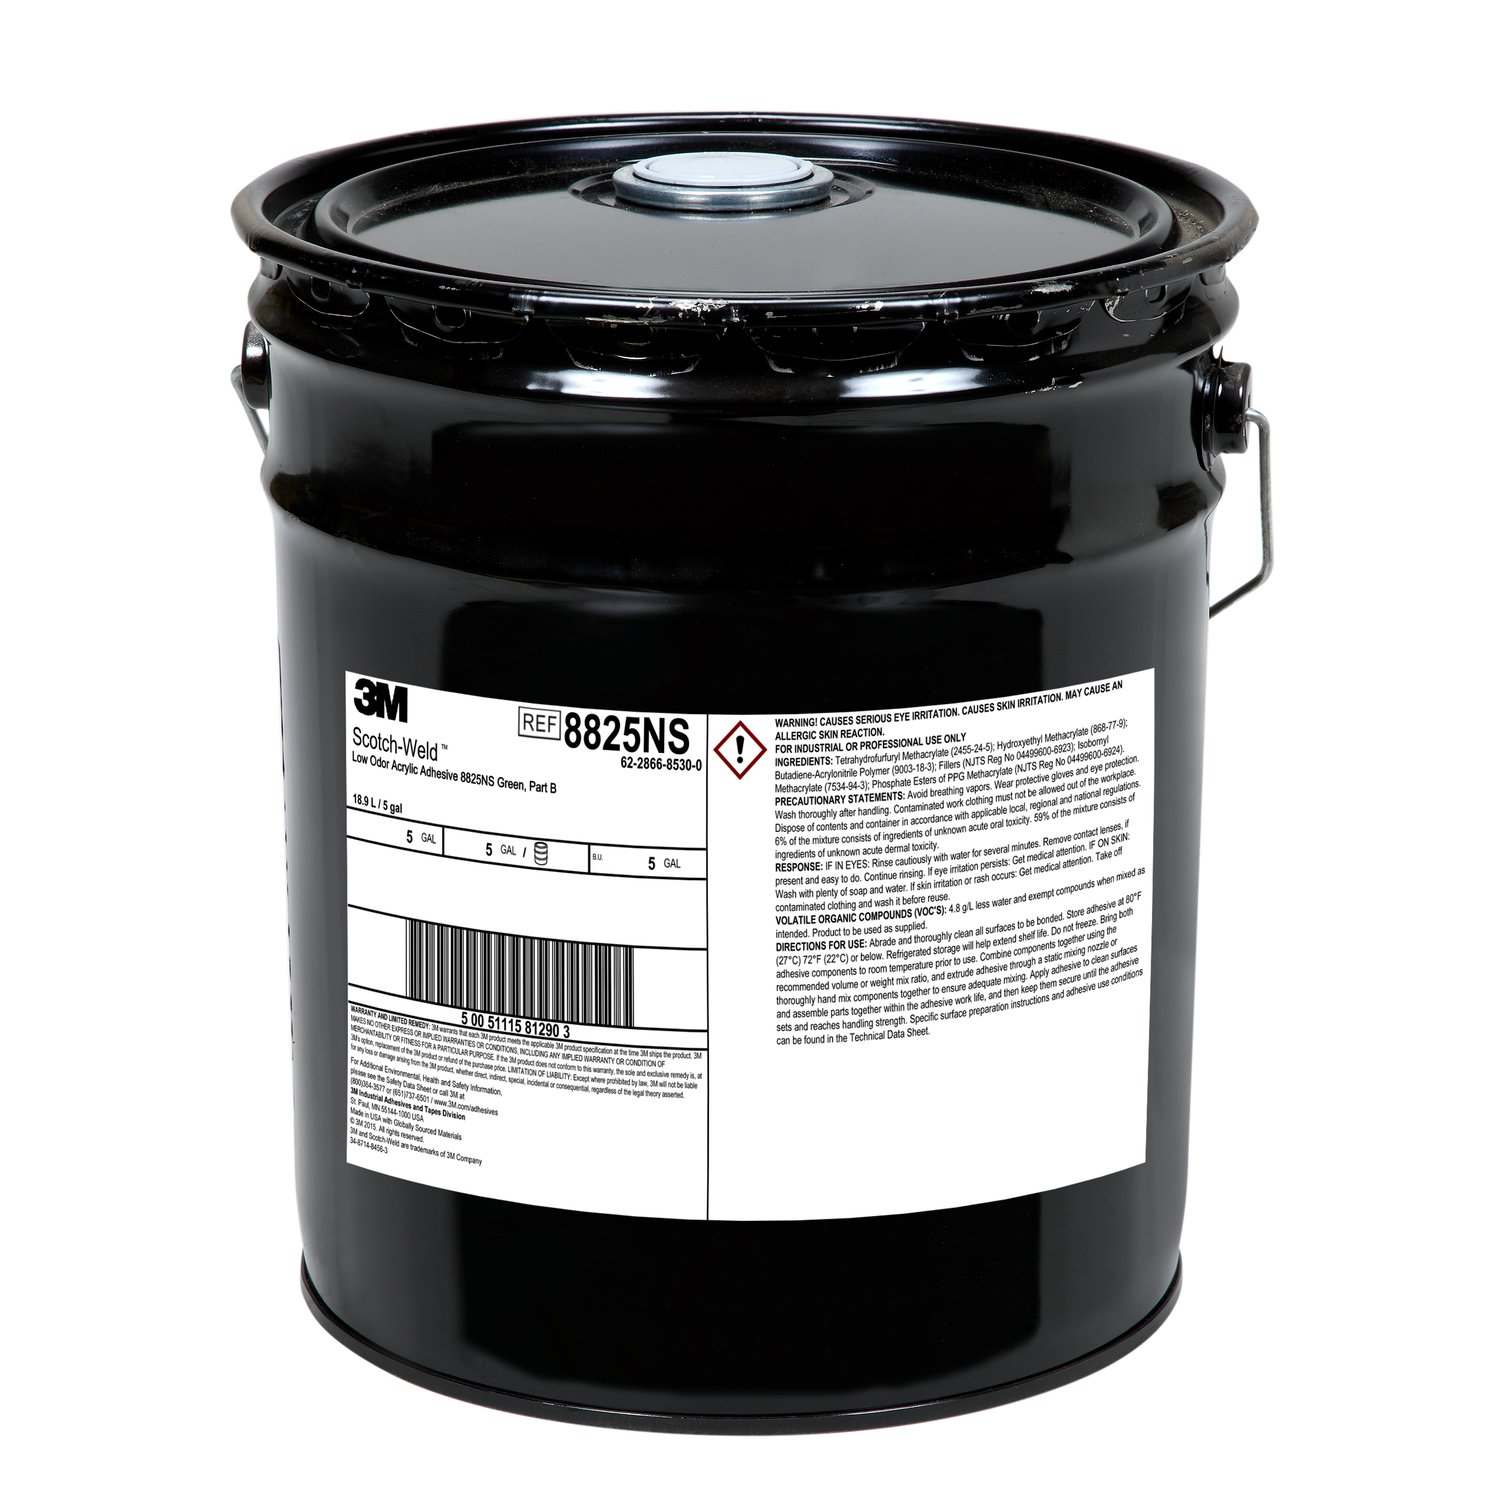 7100067291 - 3M Scotch-Weld Low Odor Acrylic Adhesive 8825NS, Green, Part B, 5
Gallon (Pail), Drum